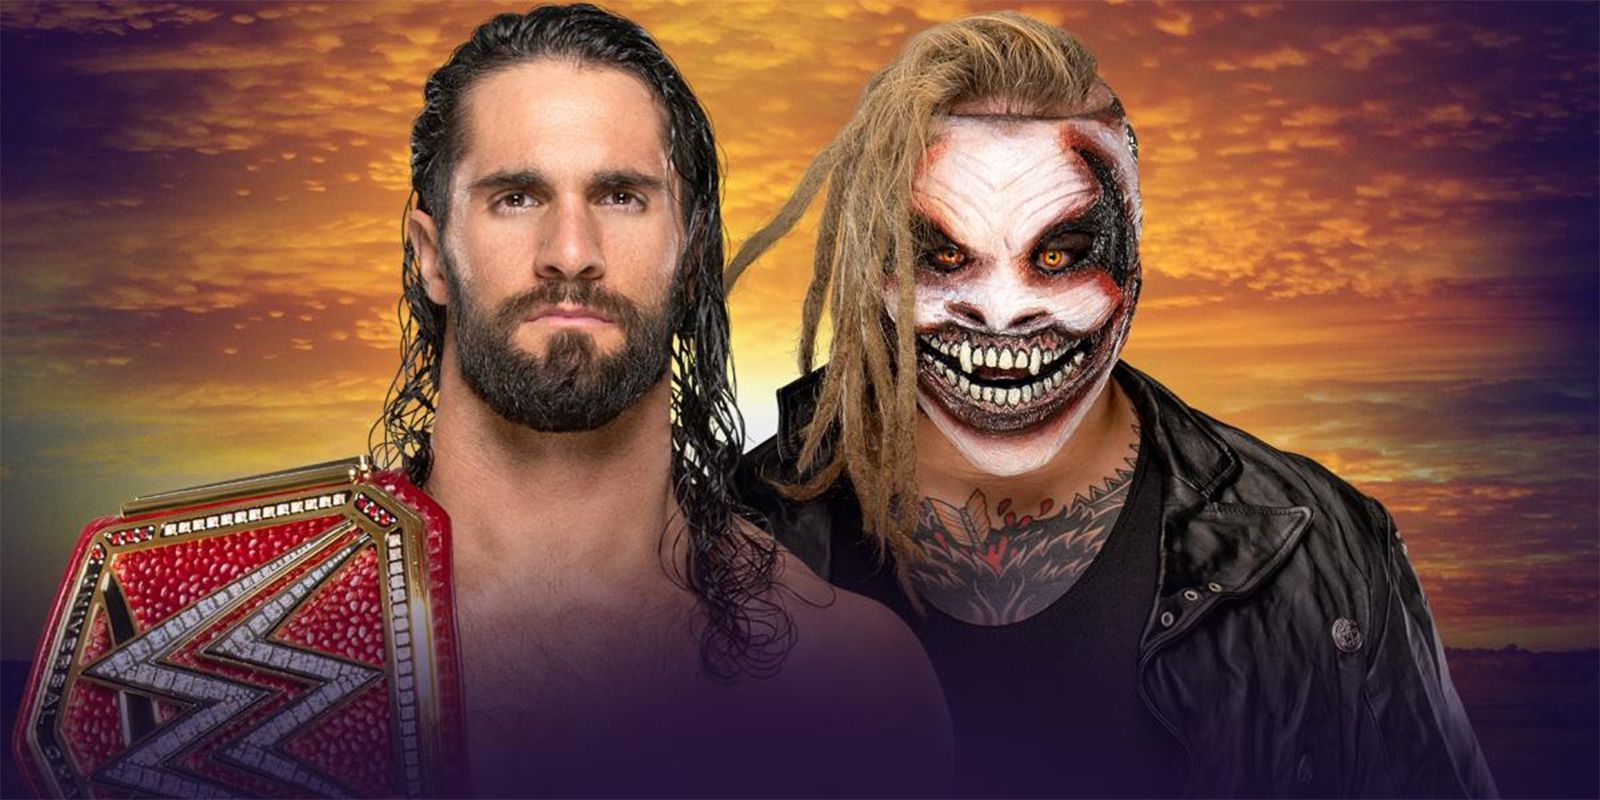 The Fiend' Bray Wyatt wins Universal title at WWE SummerSlam - WON/F4W -  WWE news, Pro Wrestling News, WWE Results, AEW News, AEW results